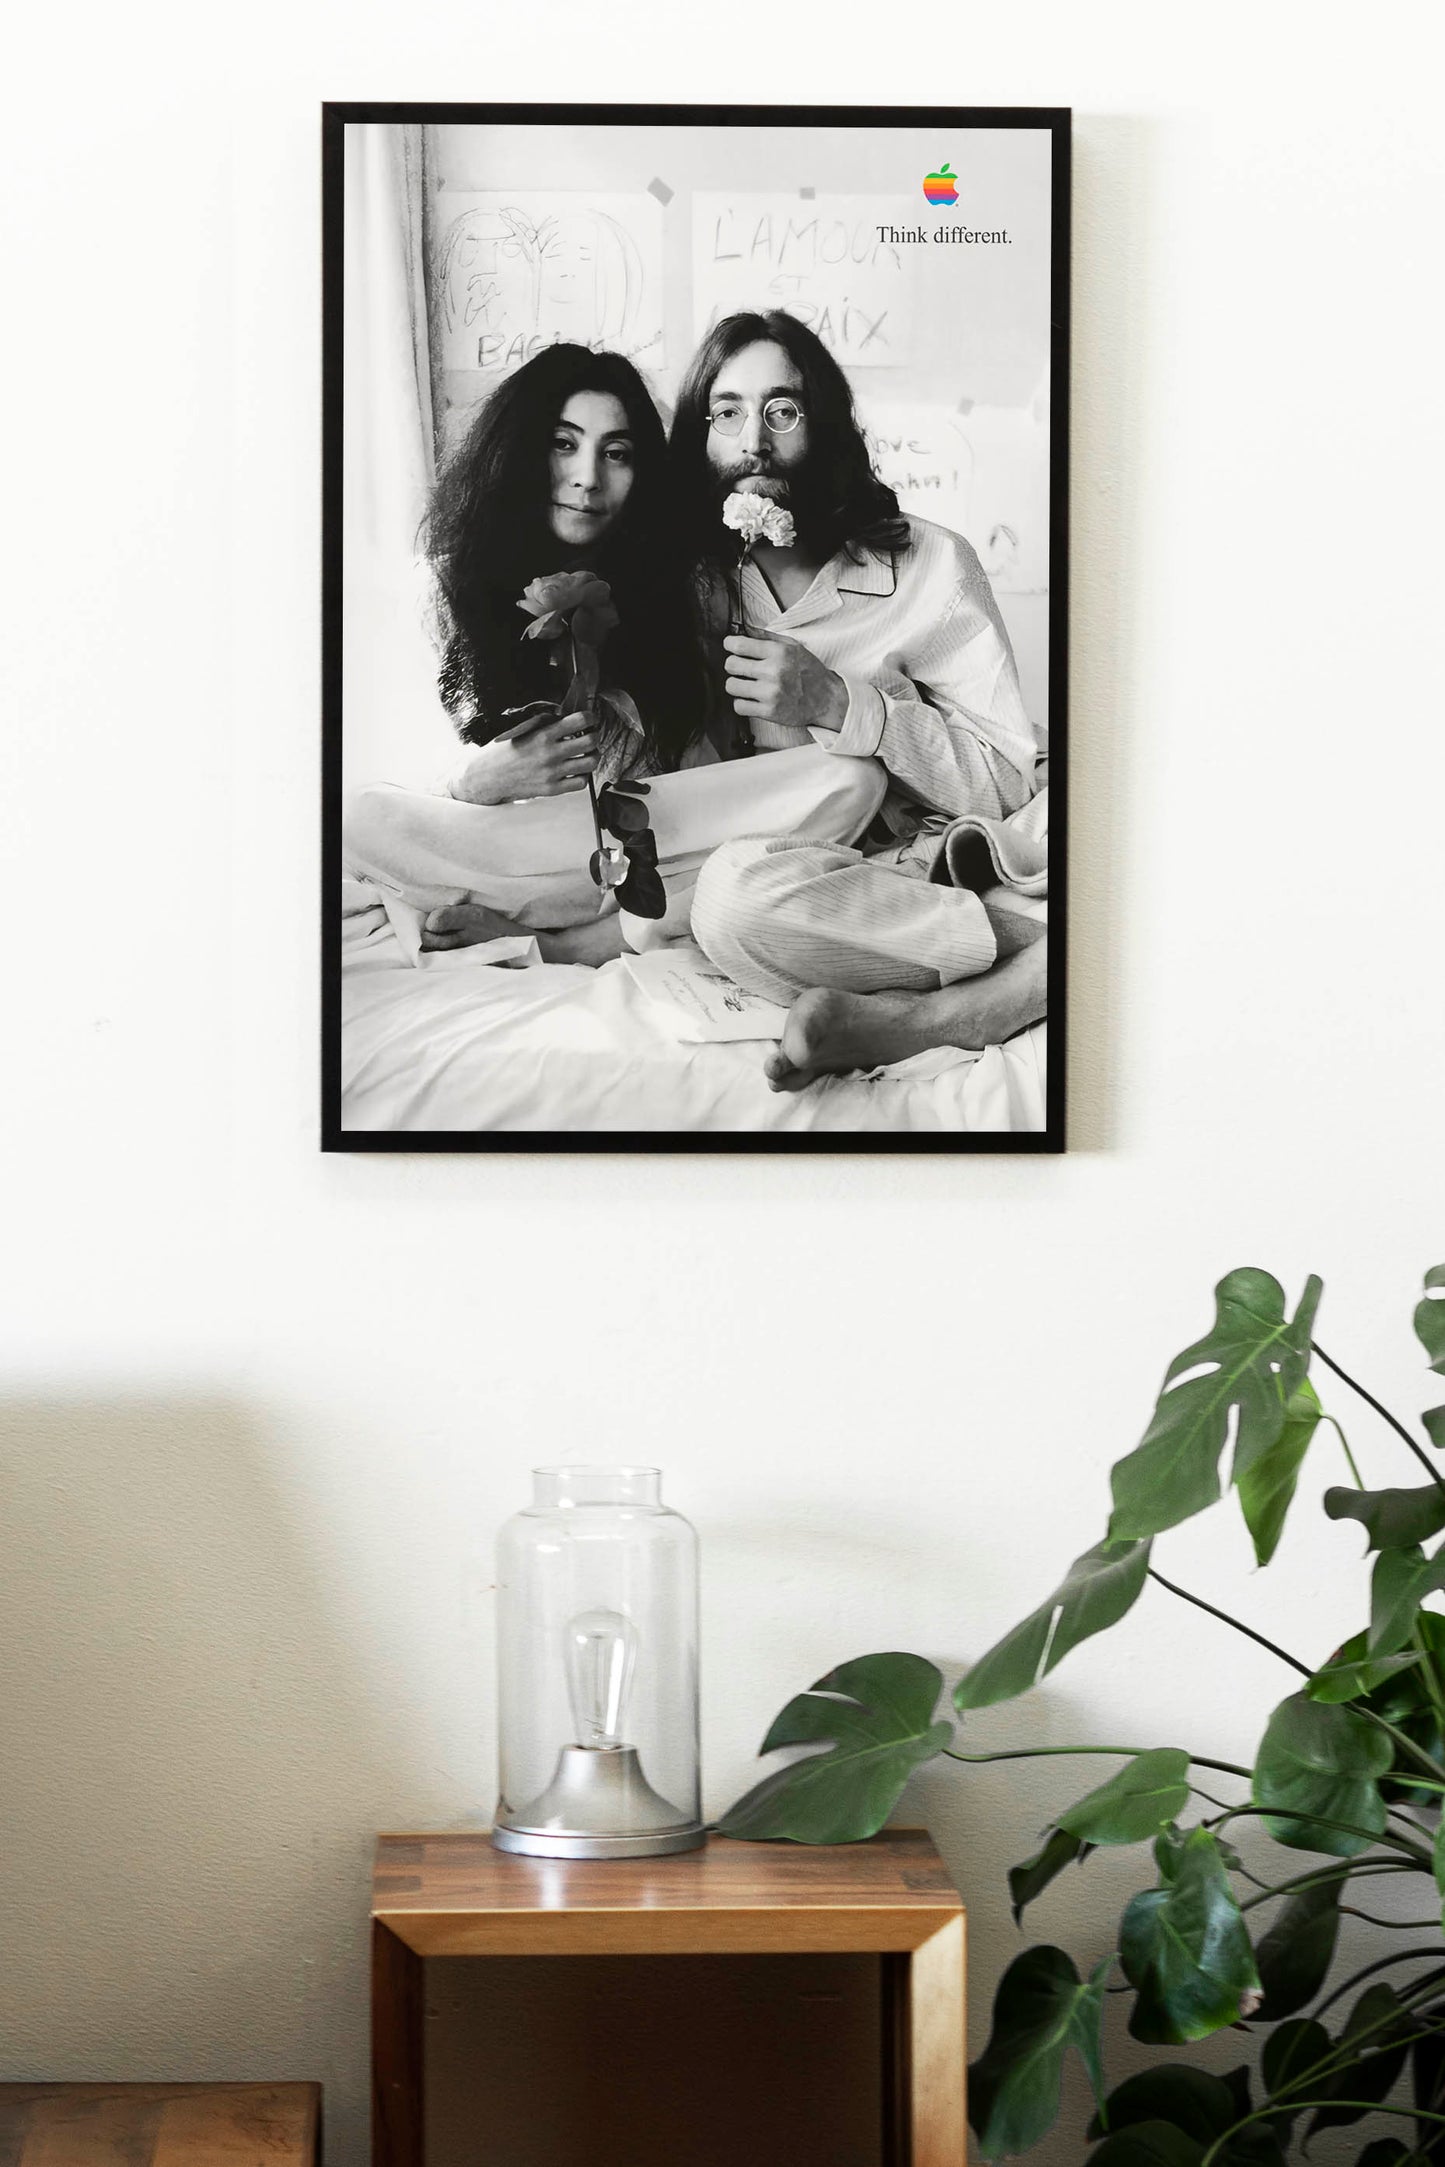 Apple John Lennon and Yoko Ono "Think Different" Poster